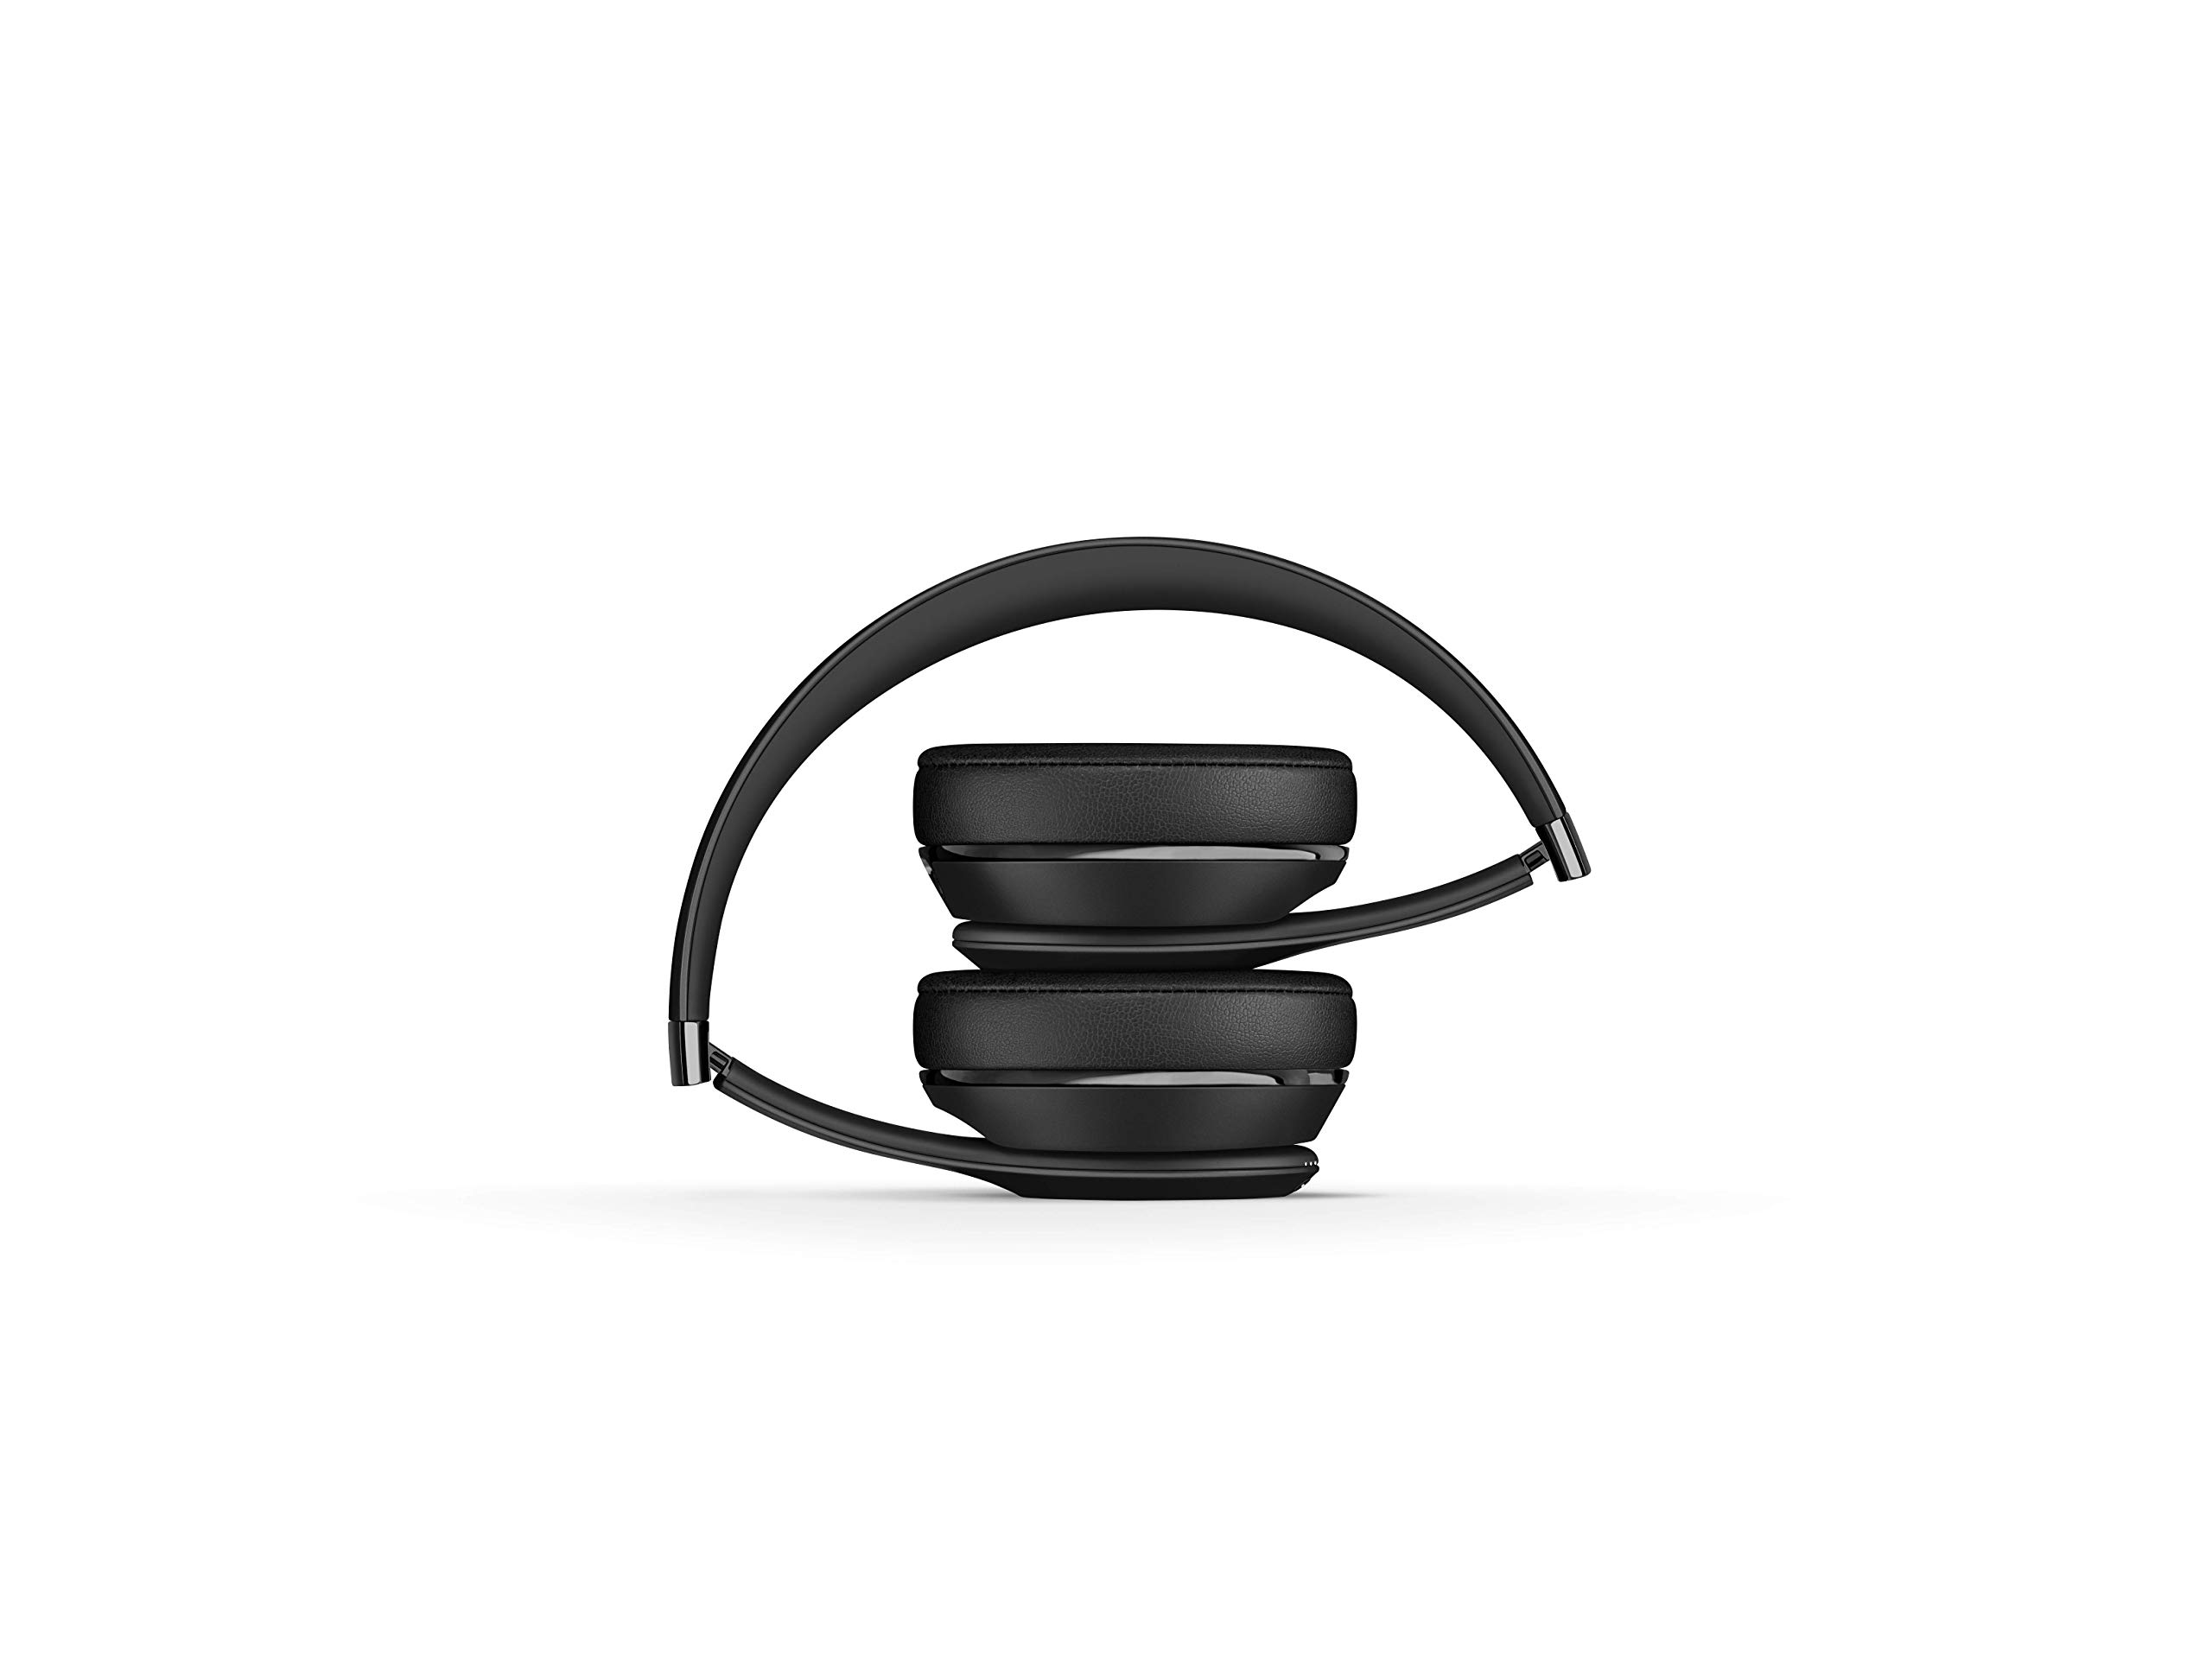 Beats Solo3 Wireless On-Ear Headphones - Apple W1 Headphone Chip, Class 1 Bluetooth, 40 Hours of Listening Time - Matte Black (Previous Model)